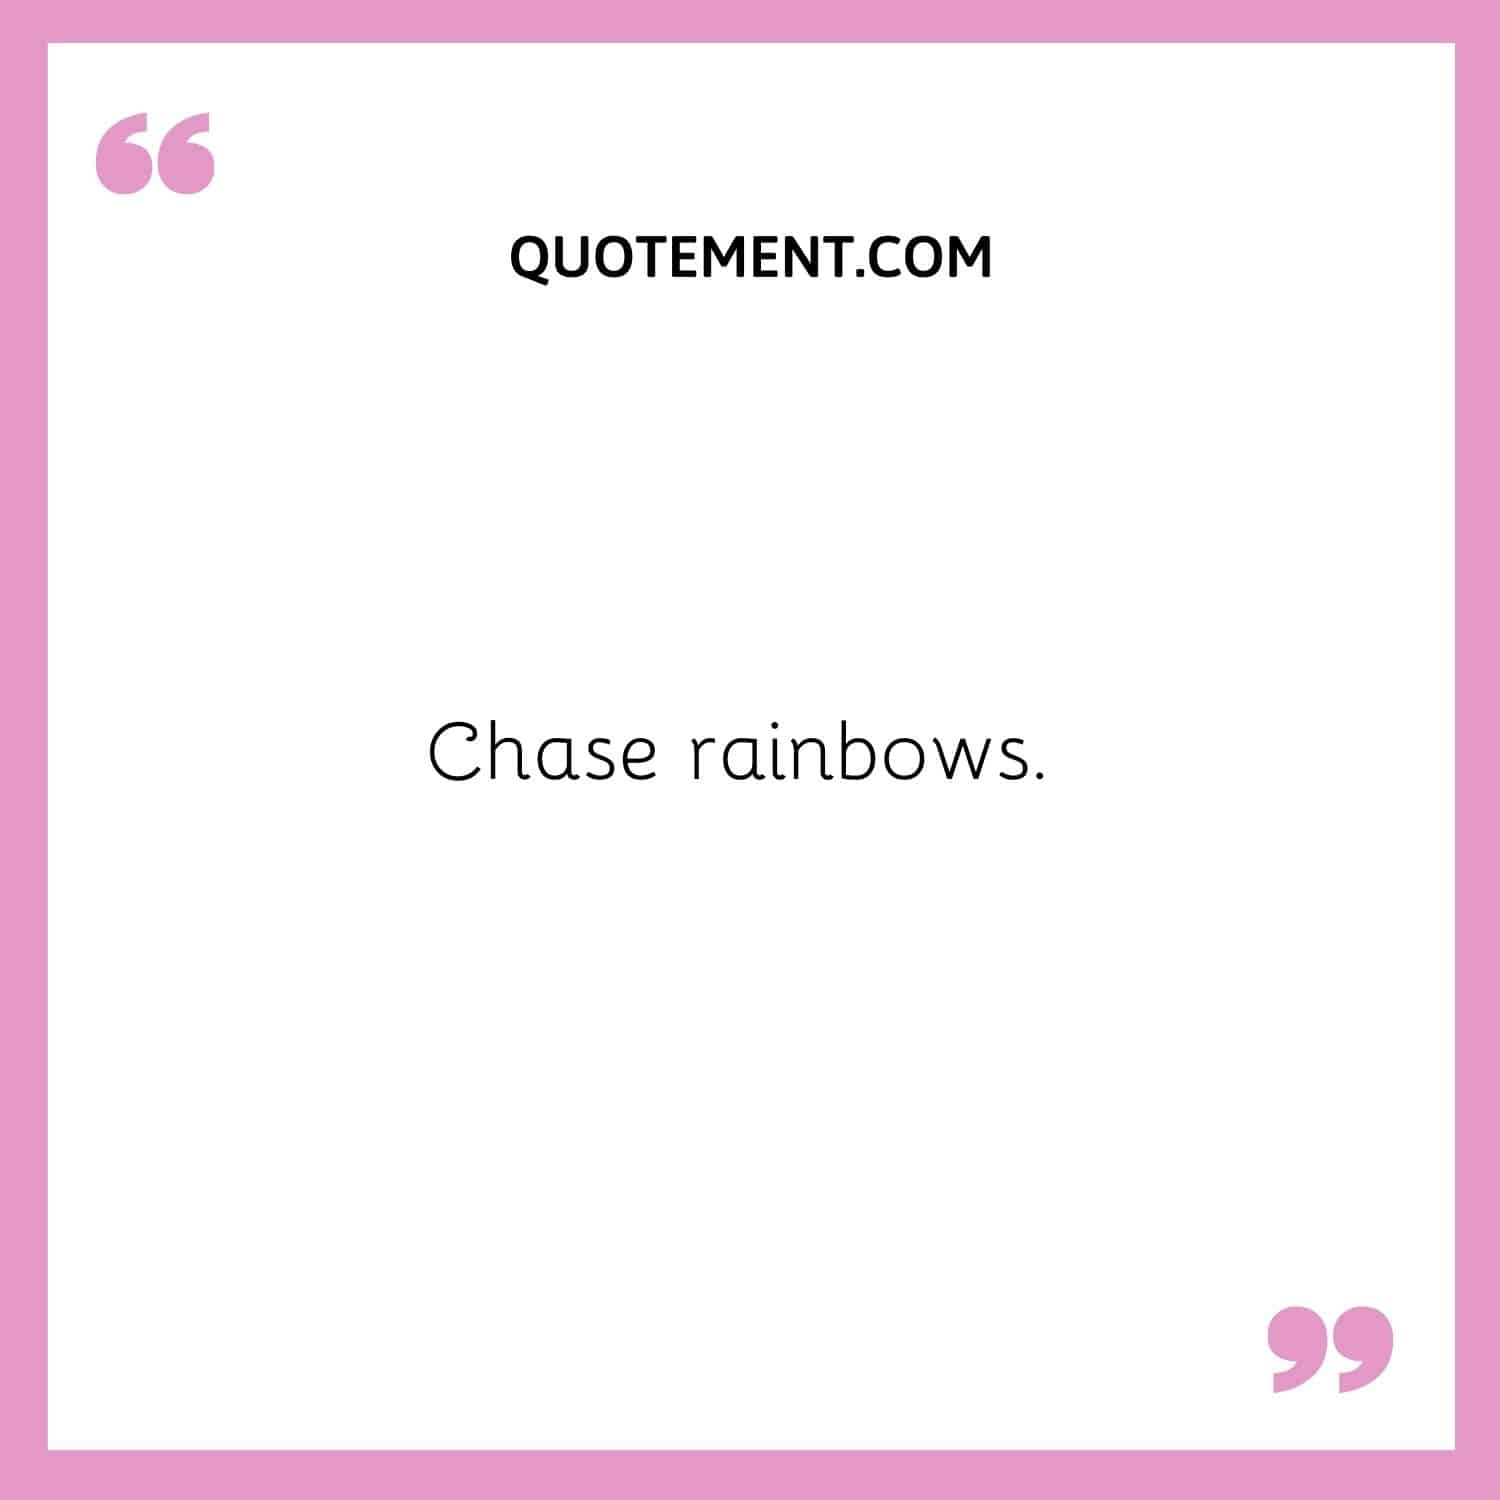 Chase rainbows